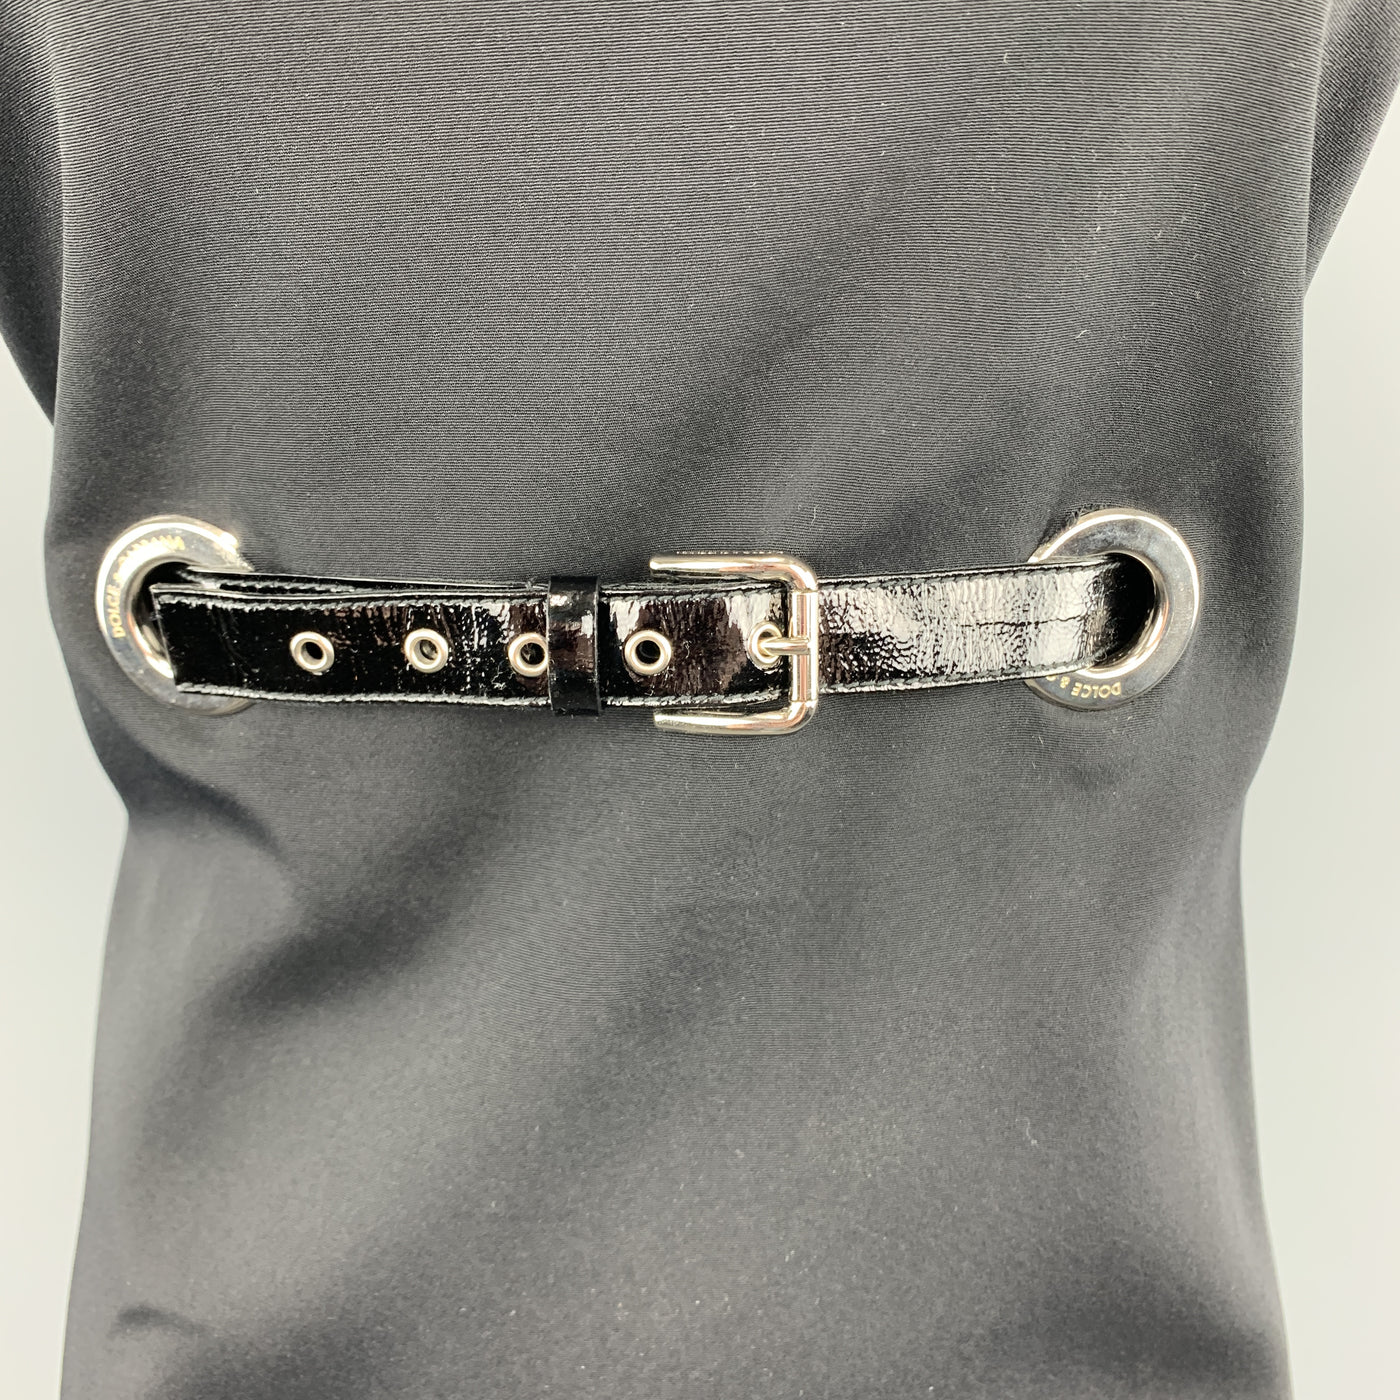 DOLCE & GABBANA Size 8 Black Patent Belt Grommet Shift Dress